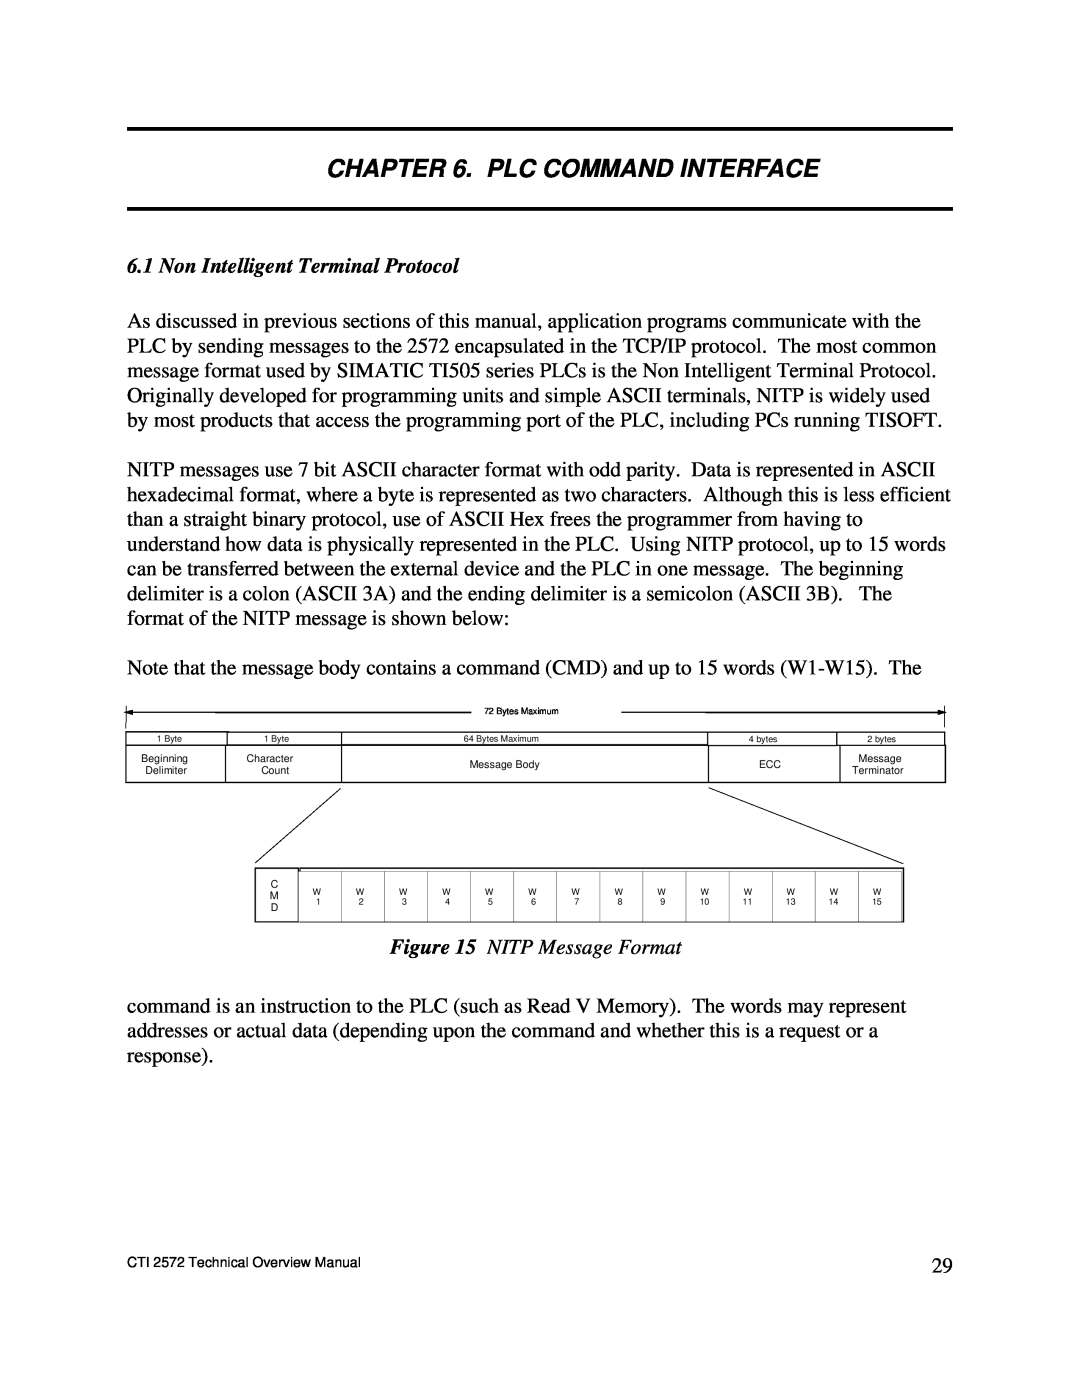 IBM CTI 2572 manual Plc Command Interface, Non Intelligent Terminal Protocol 